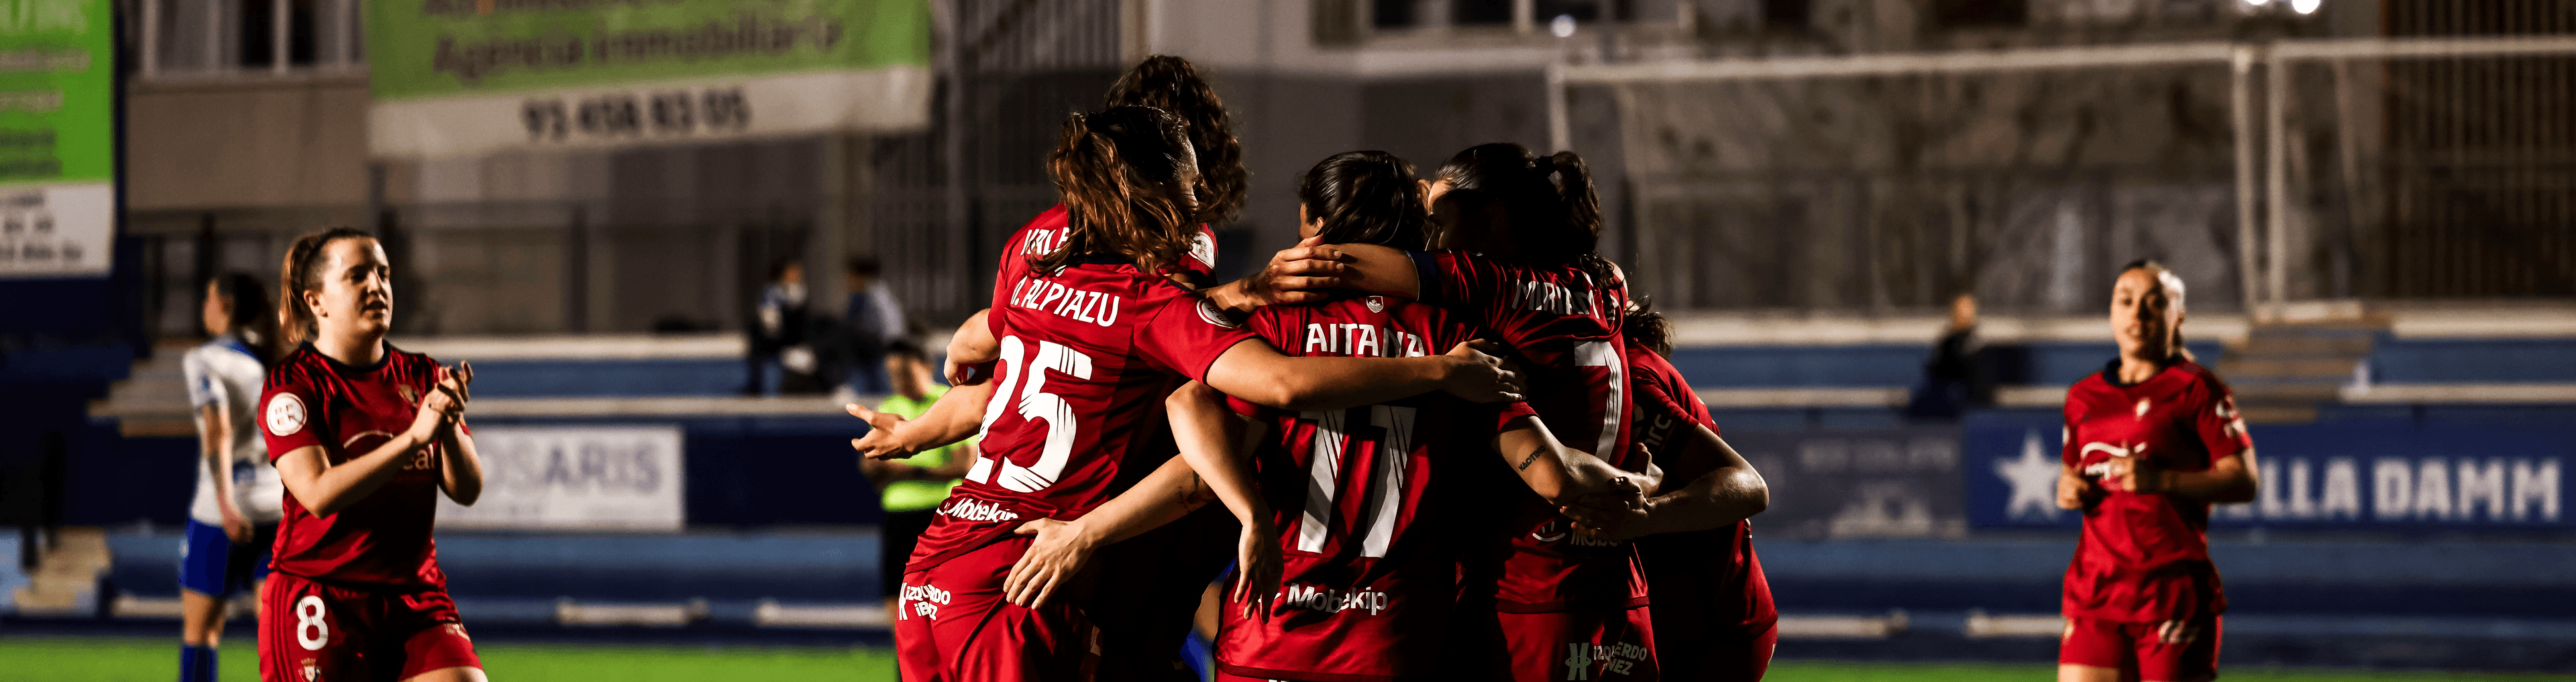 Goleada a domicilio de Osasuna Femenino ante el Europa (0-3)